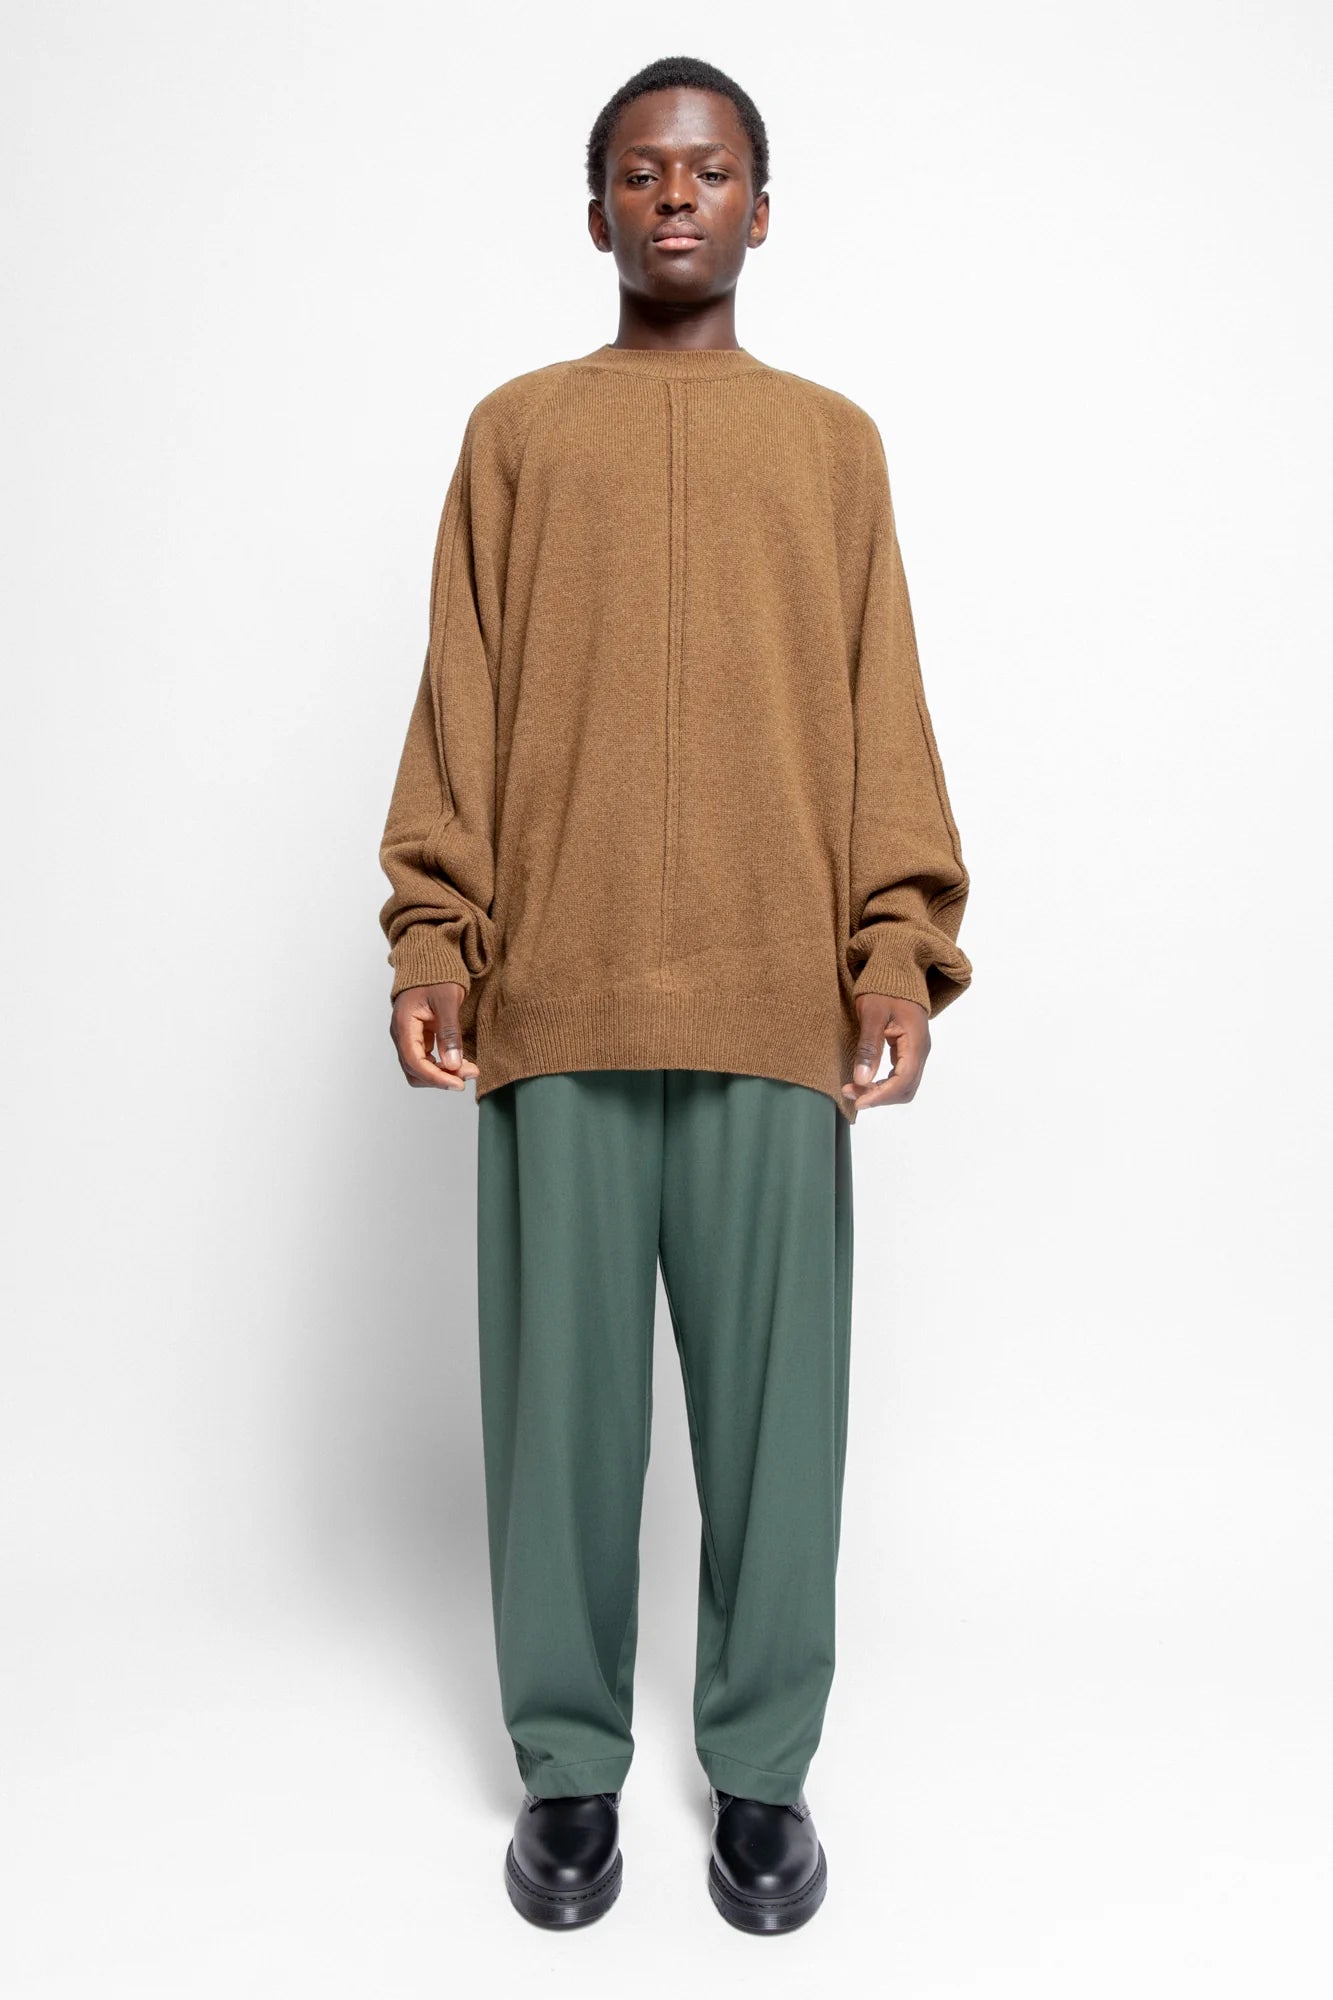 Serge unisex knit in brown